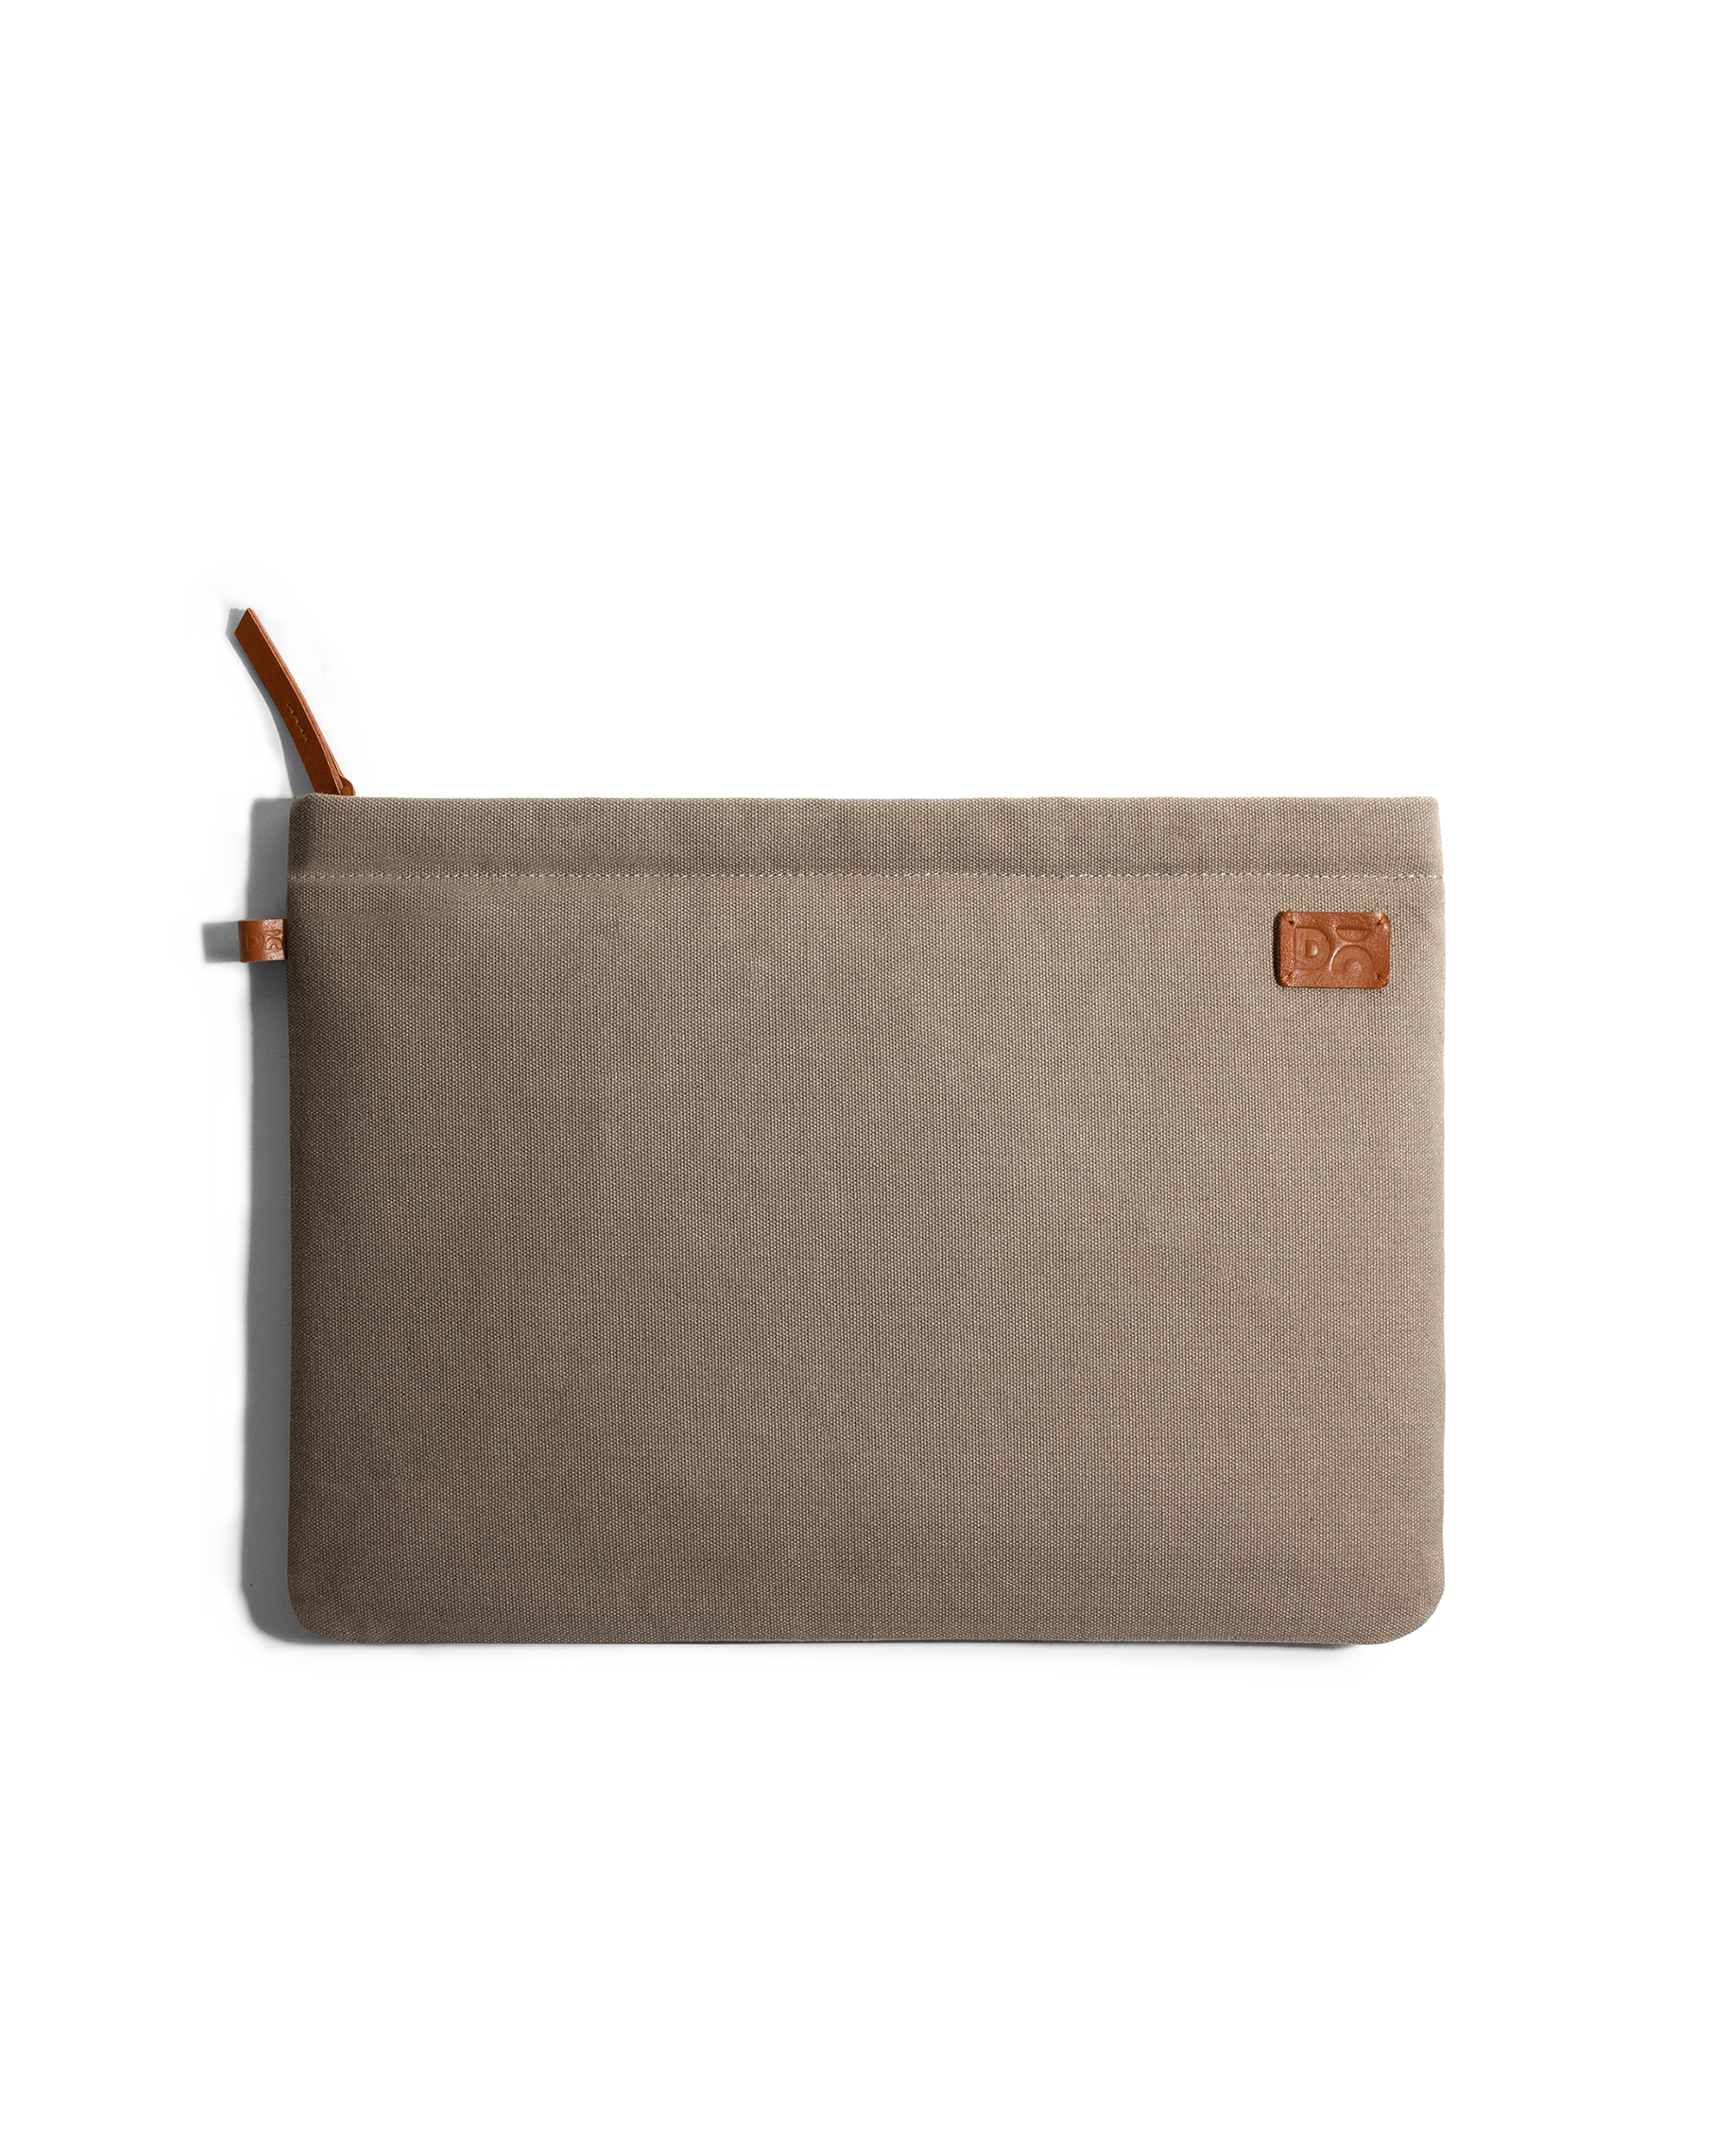 Leather Bag for MacBook - The Minimalist 2.0 – Geometric Goods